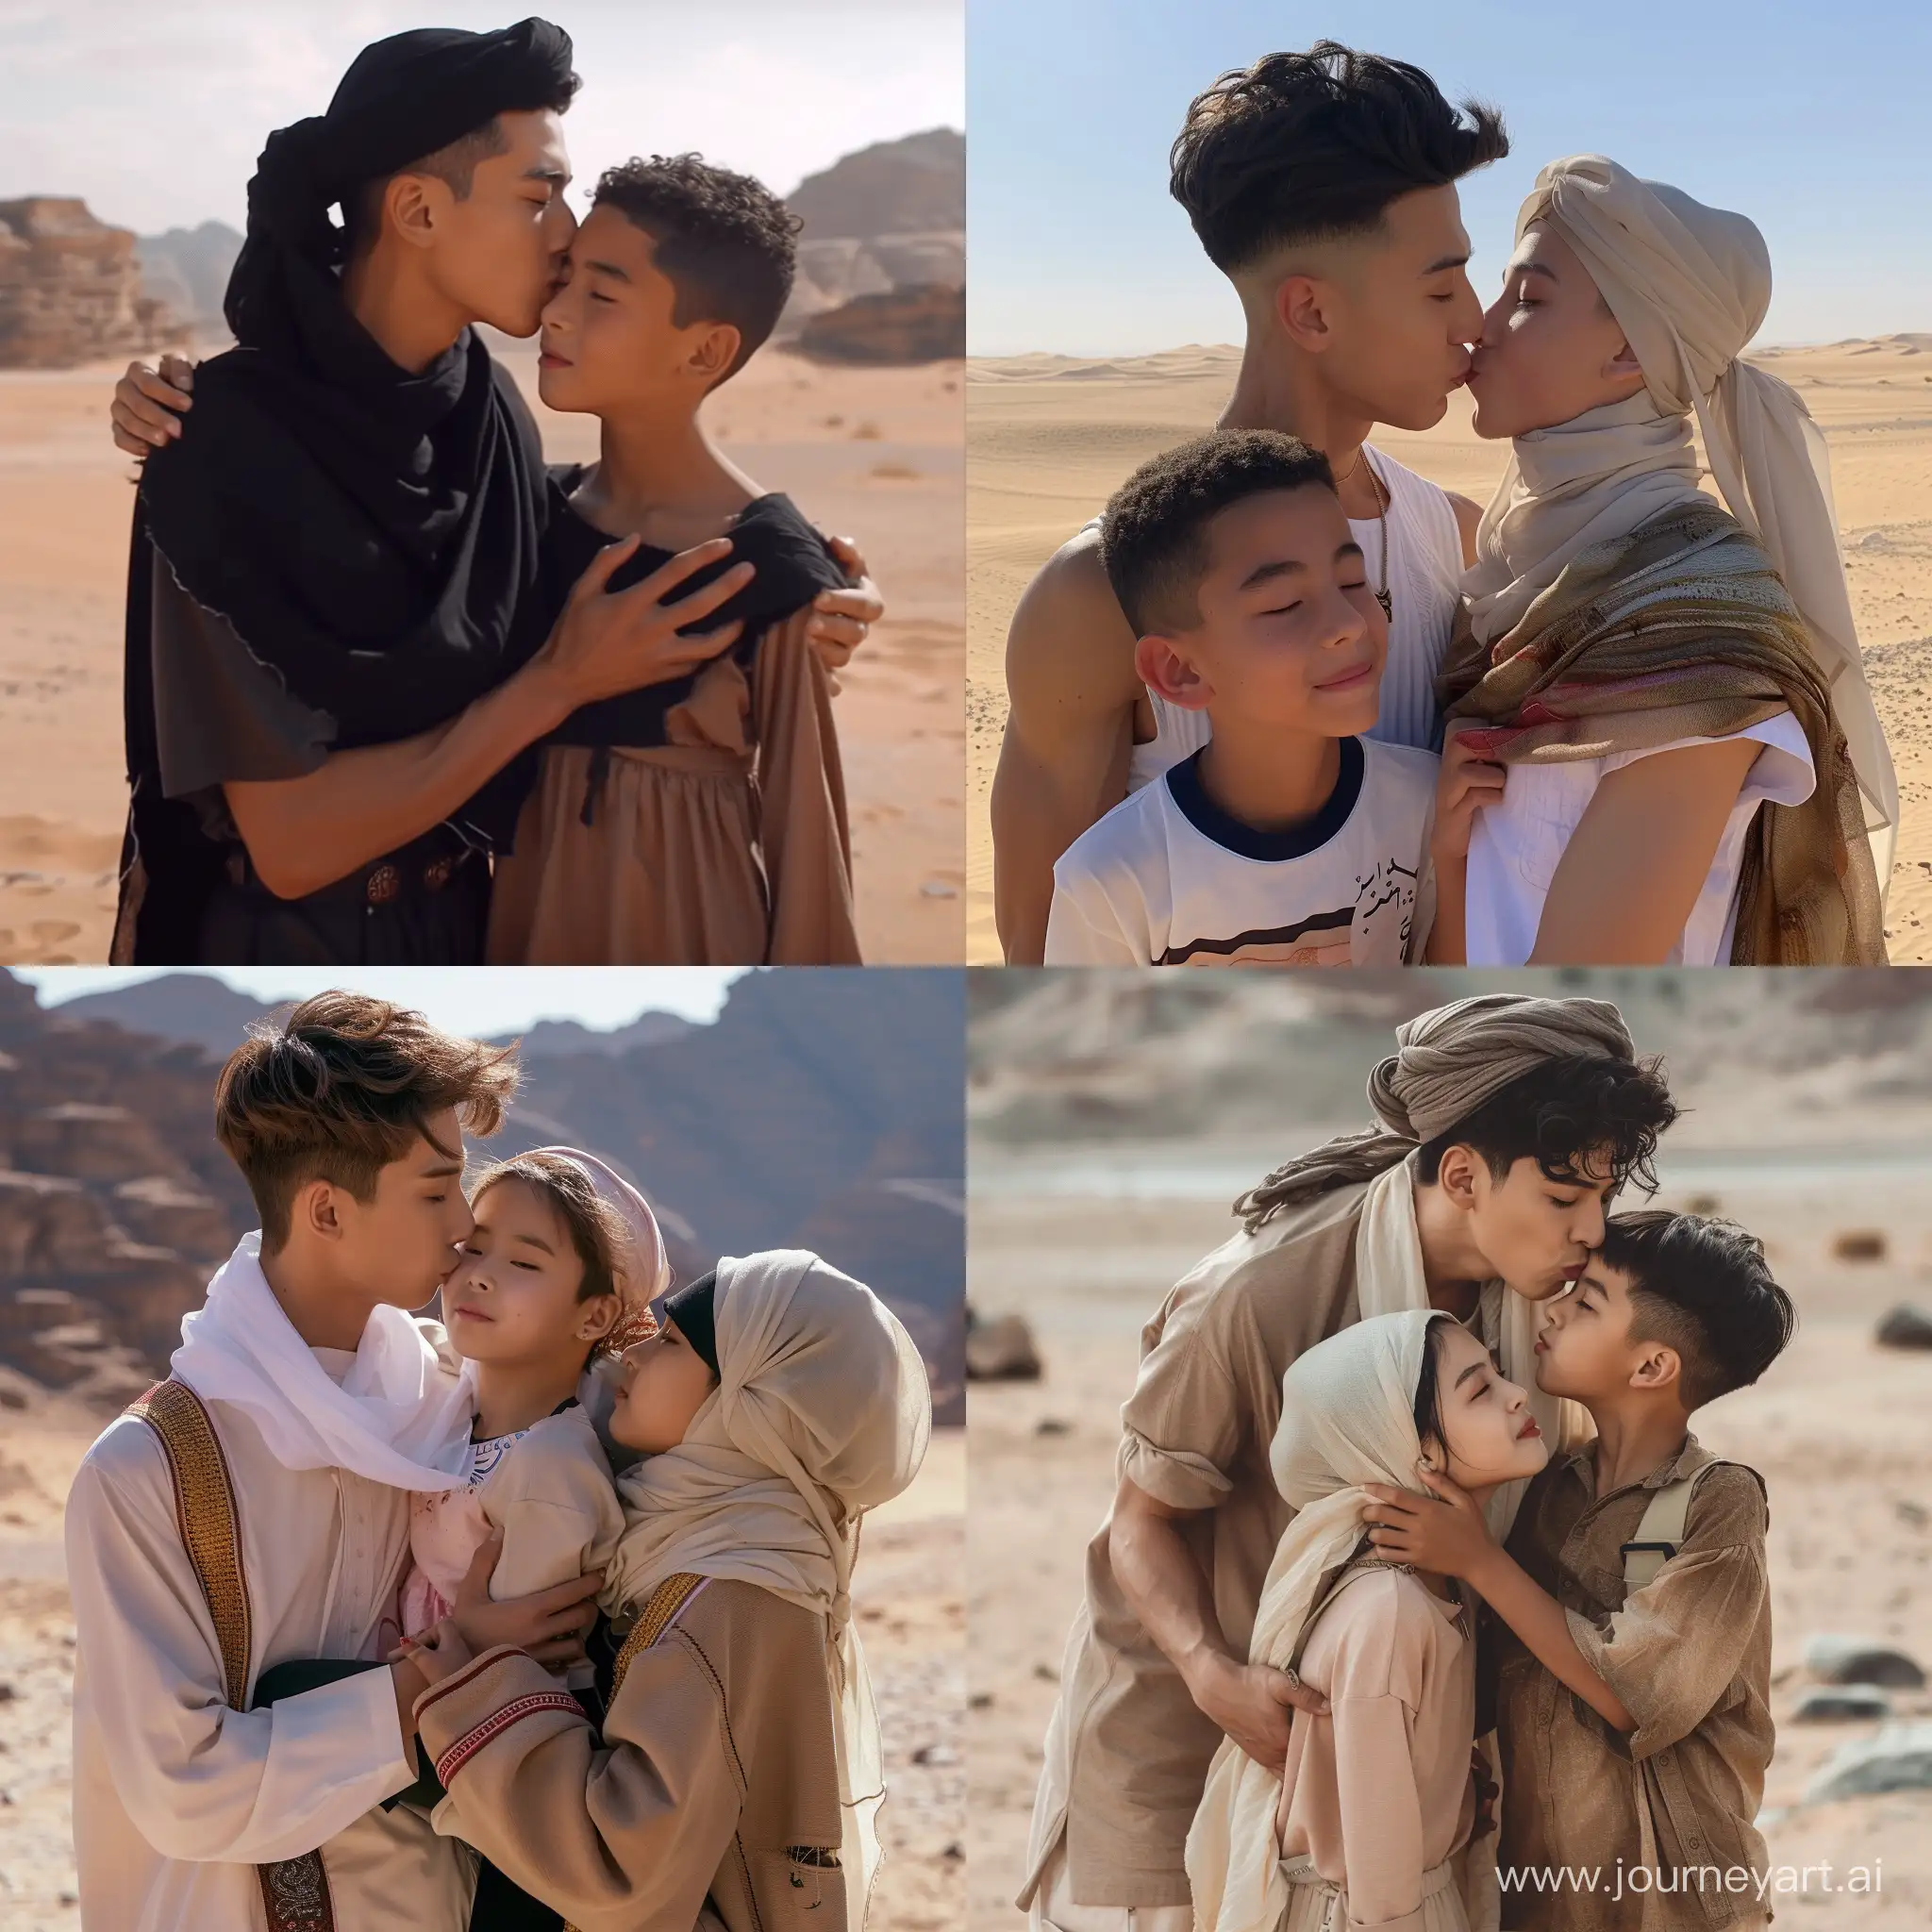 Very Tall bery muscular kpop boy  kiss and carry short arab girl next to short arab boy in desert 